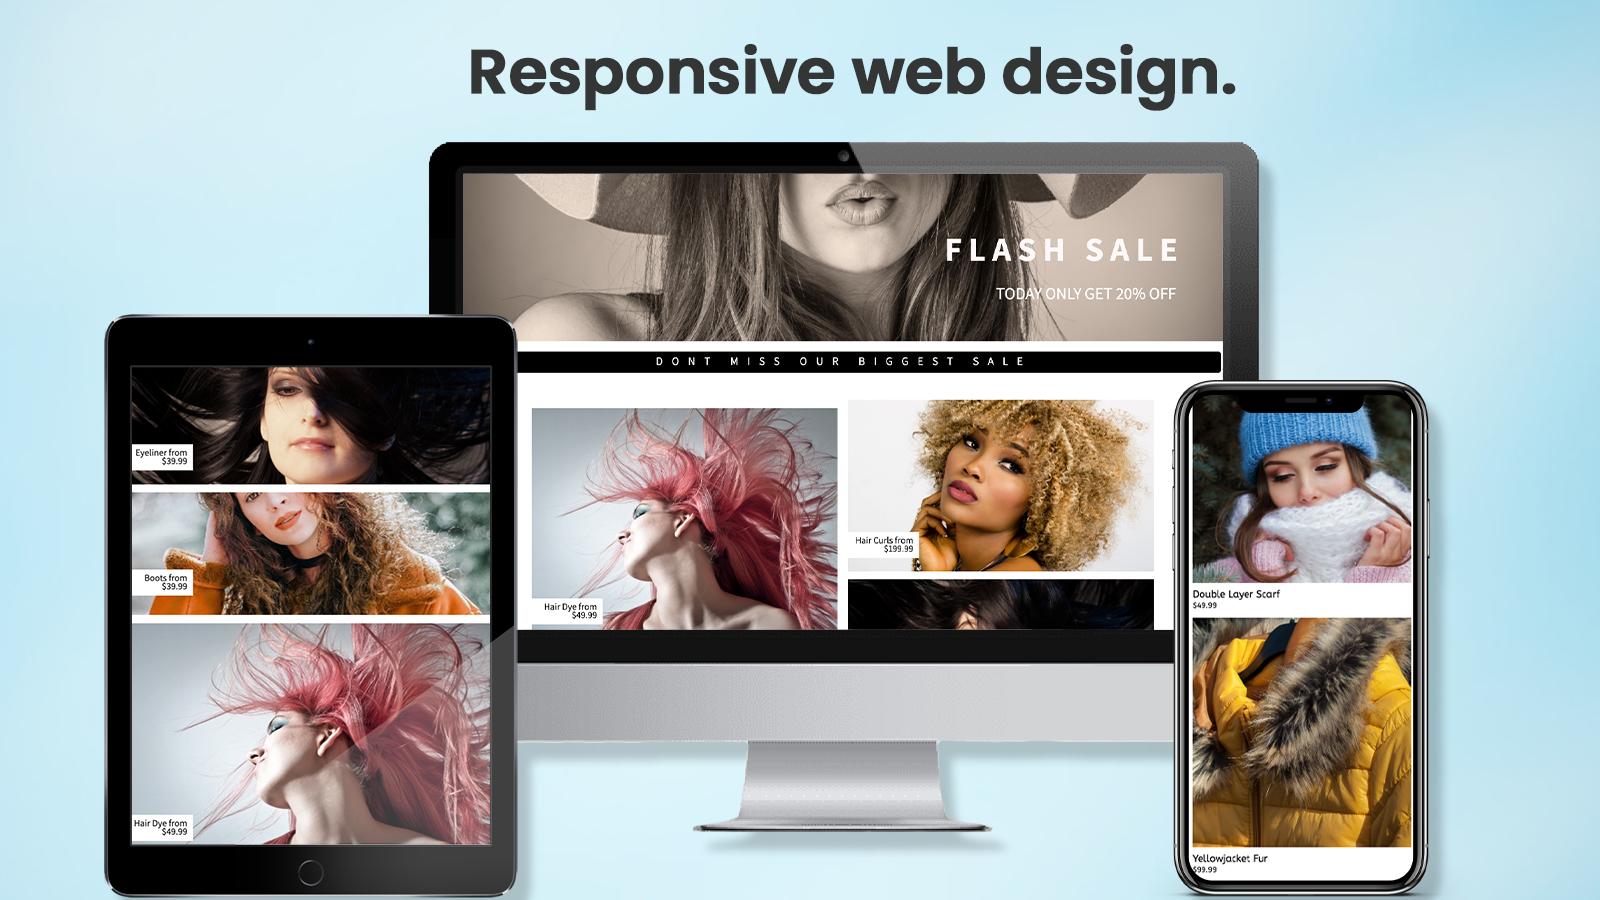 Responsiv Webbdesign